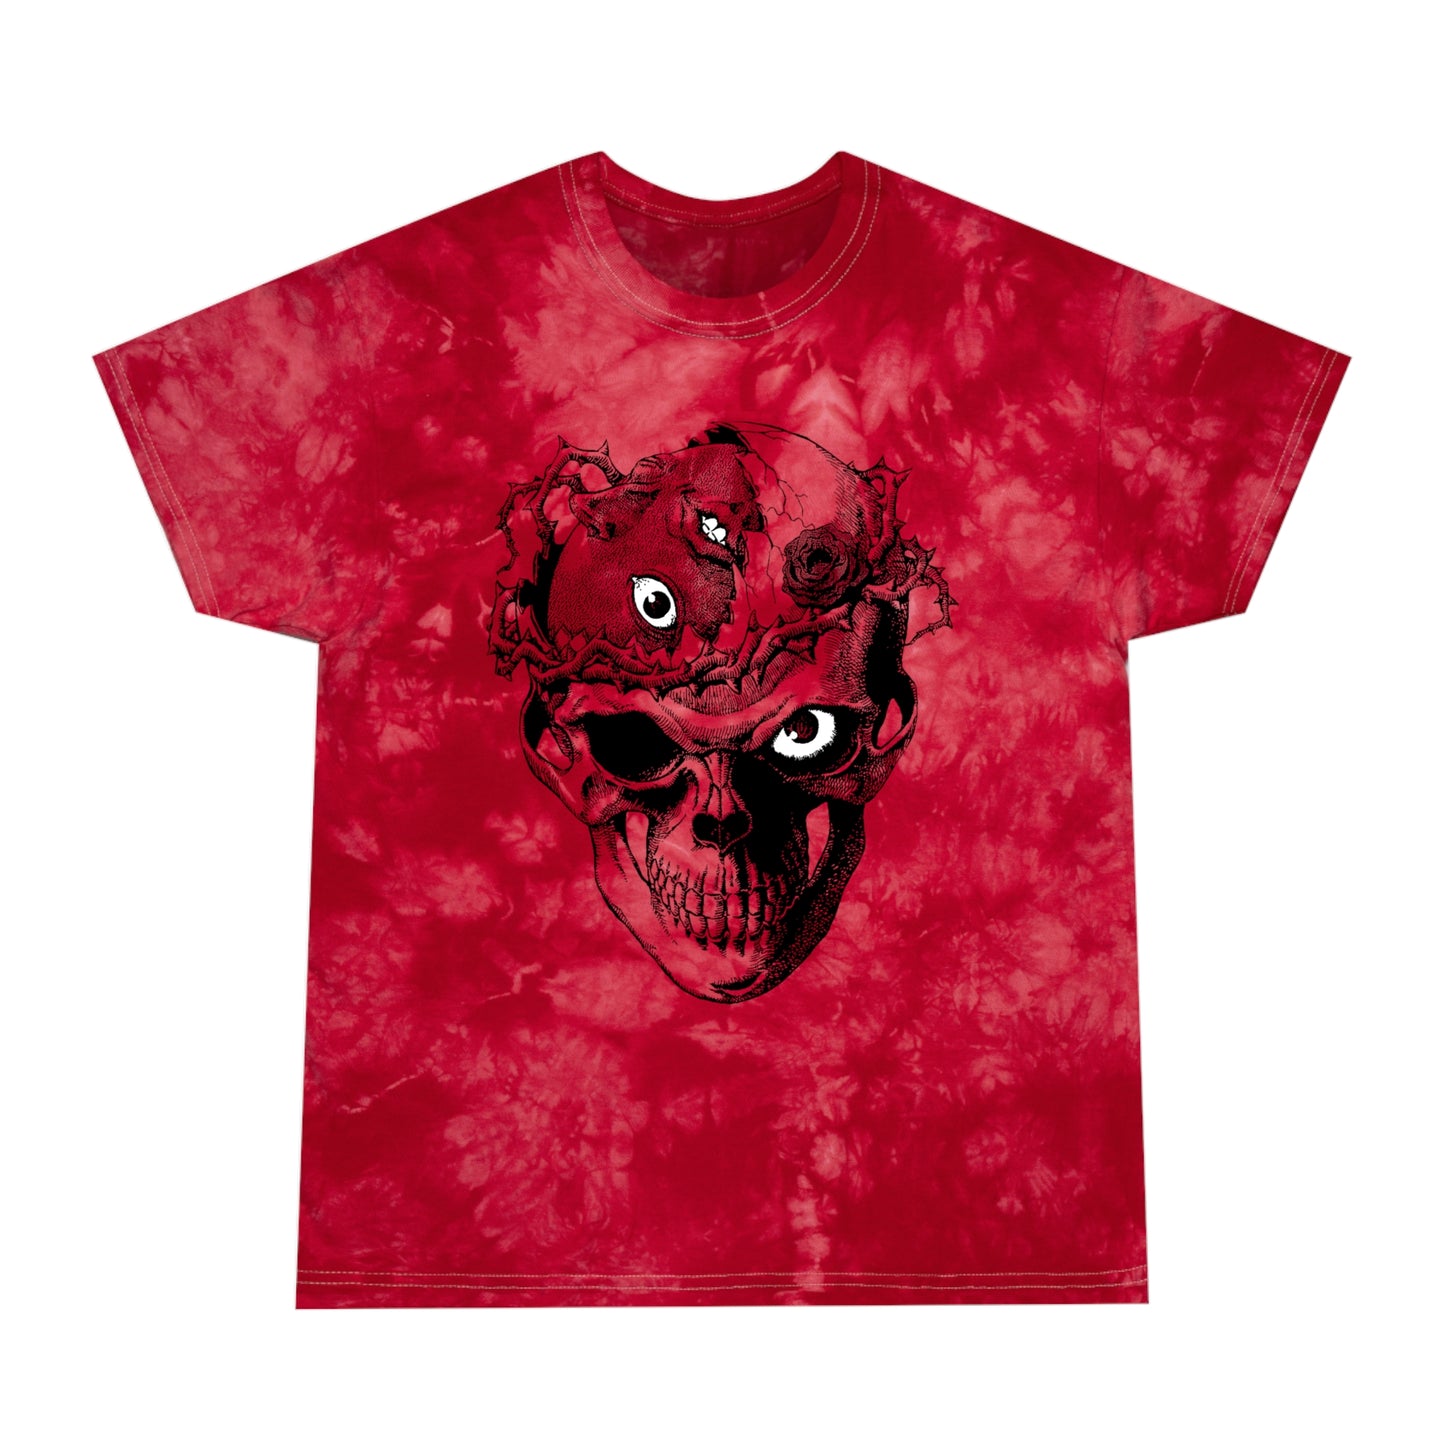 Skull of the Berserk tie-dye t-shirt